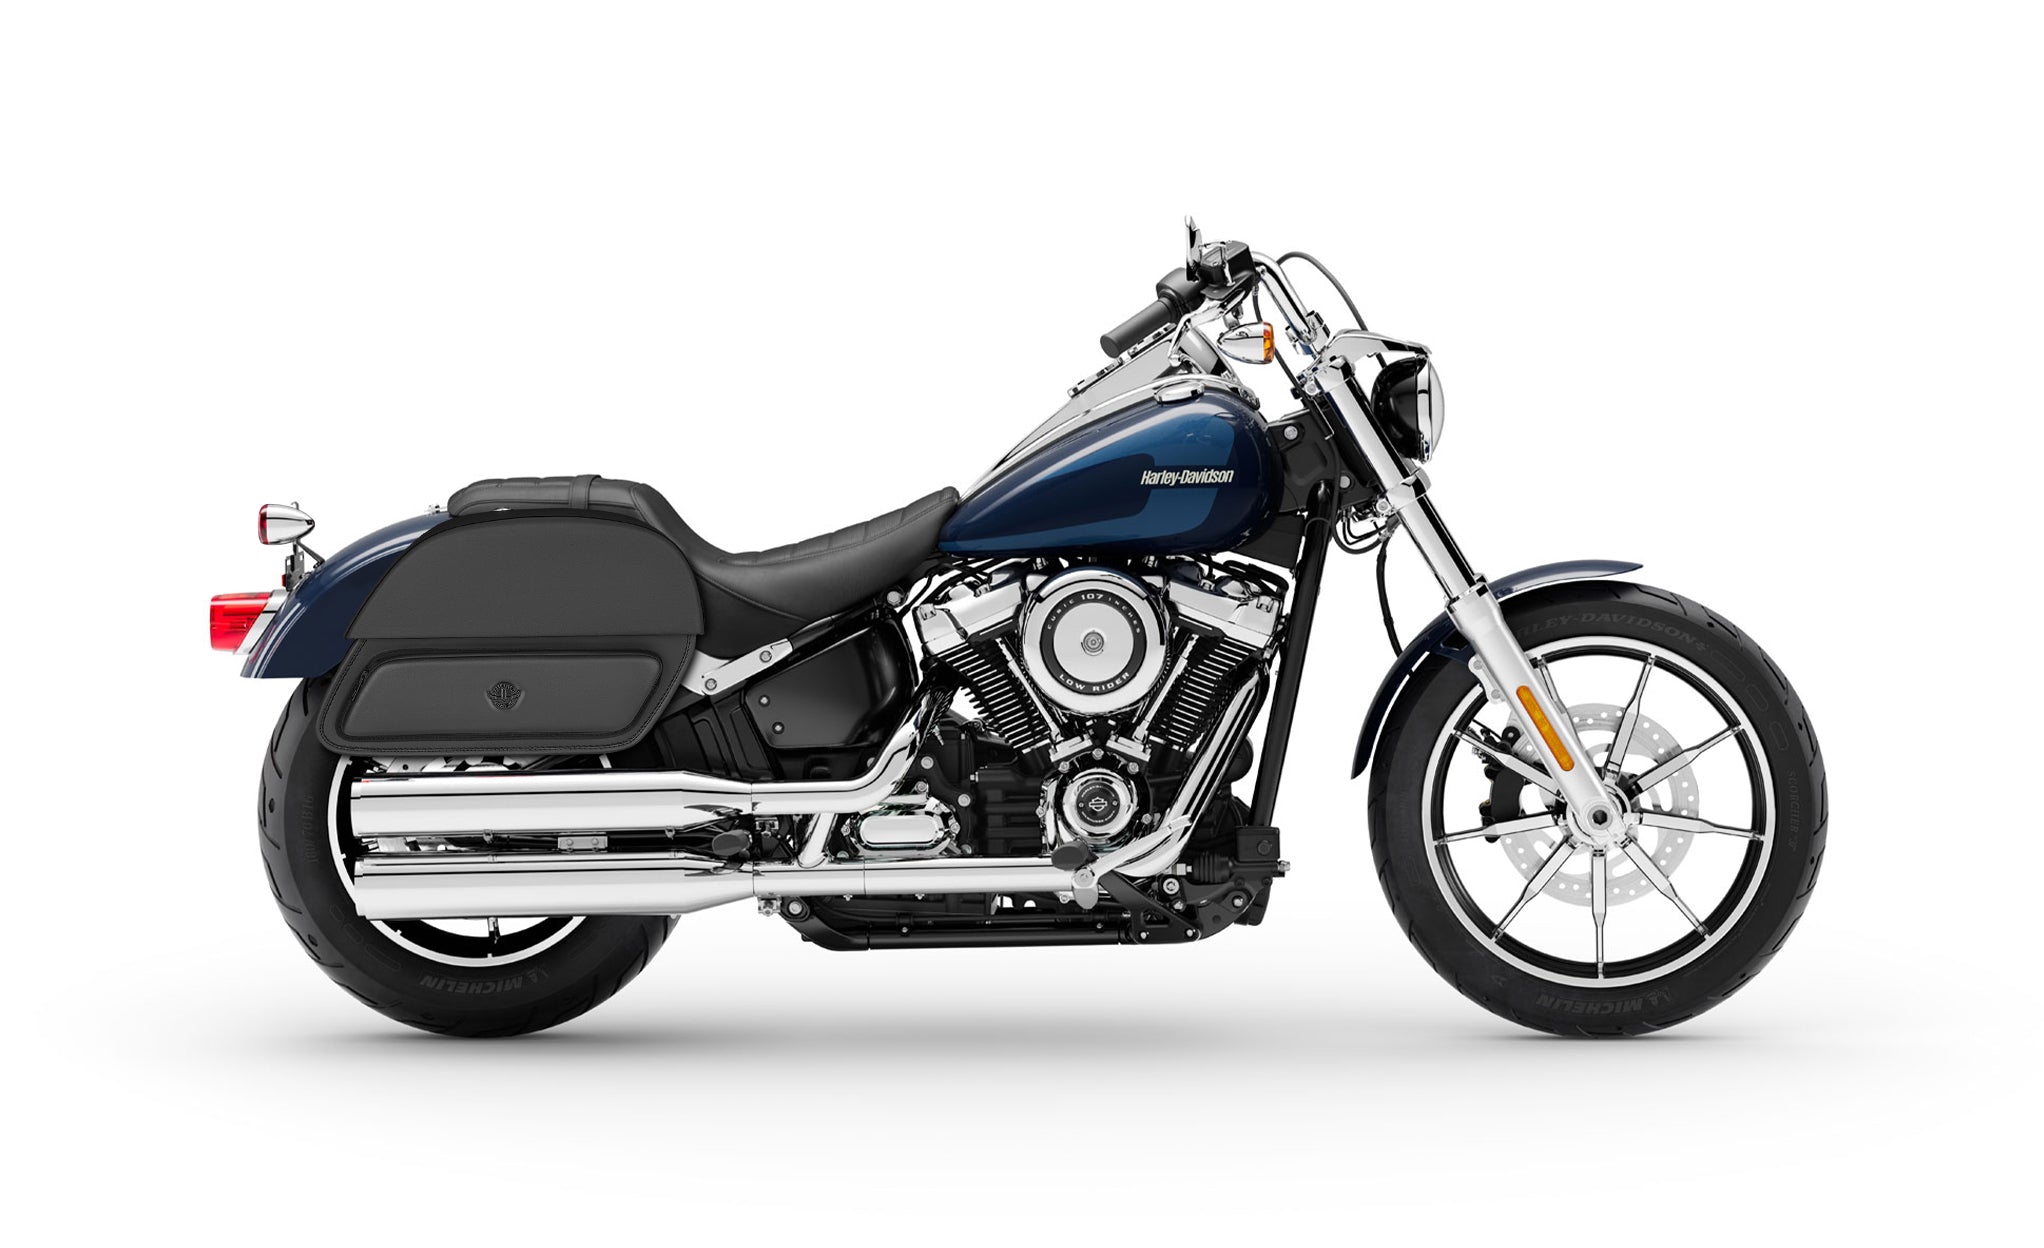 28L - Pantheon Medium Motorcycle Saddlebags for Harley Softail Low Rider FXLR on Bike Photo @expand